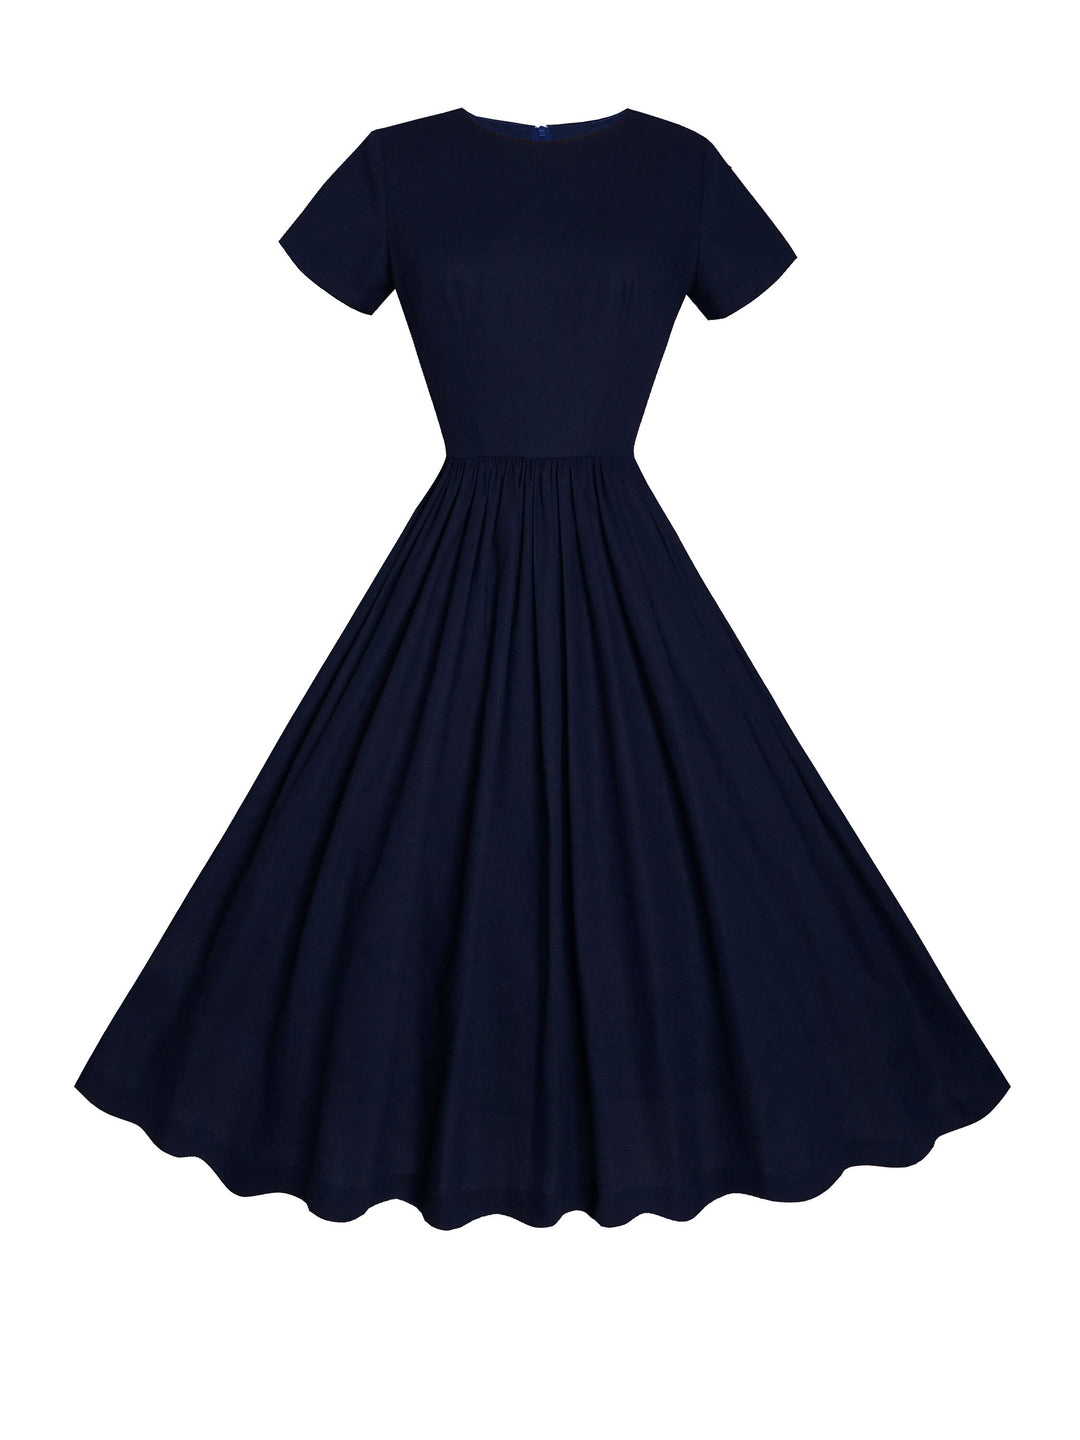 MTO - Dorothy Dress in Indigo Blue Linen